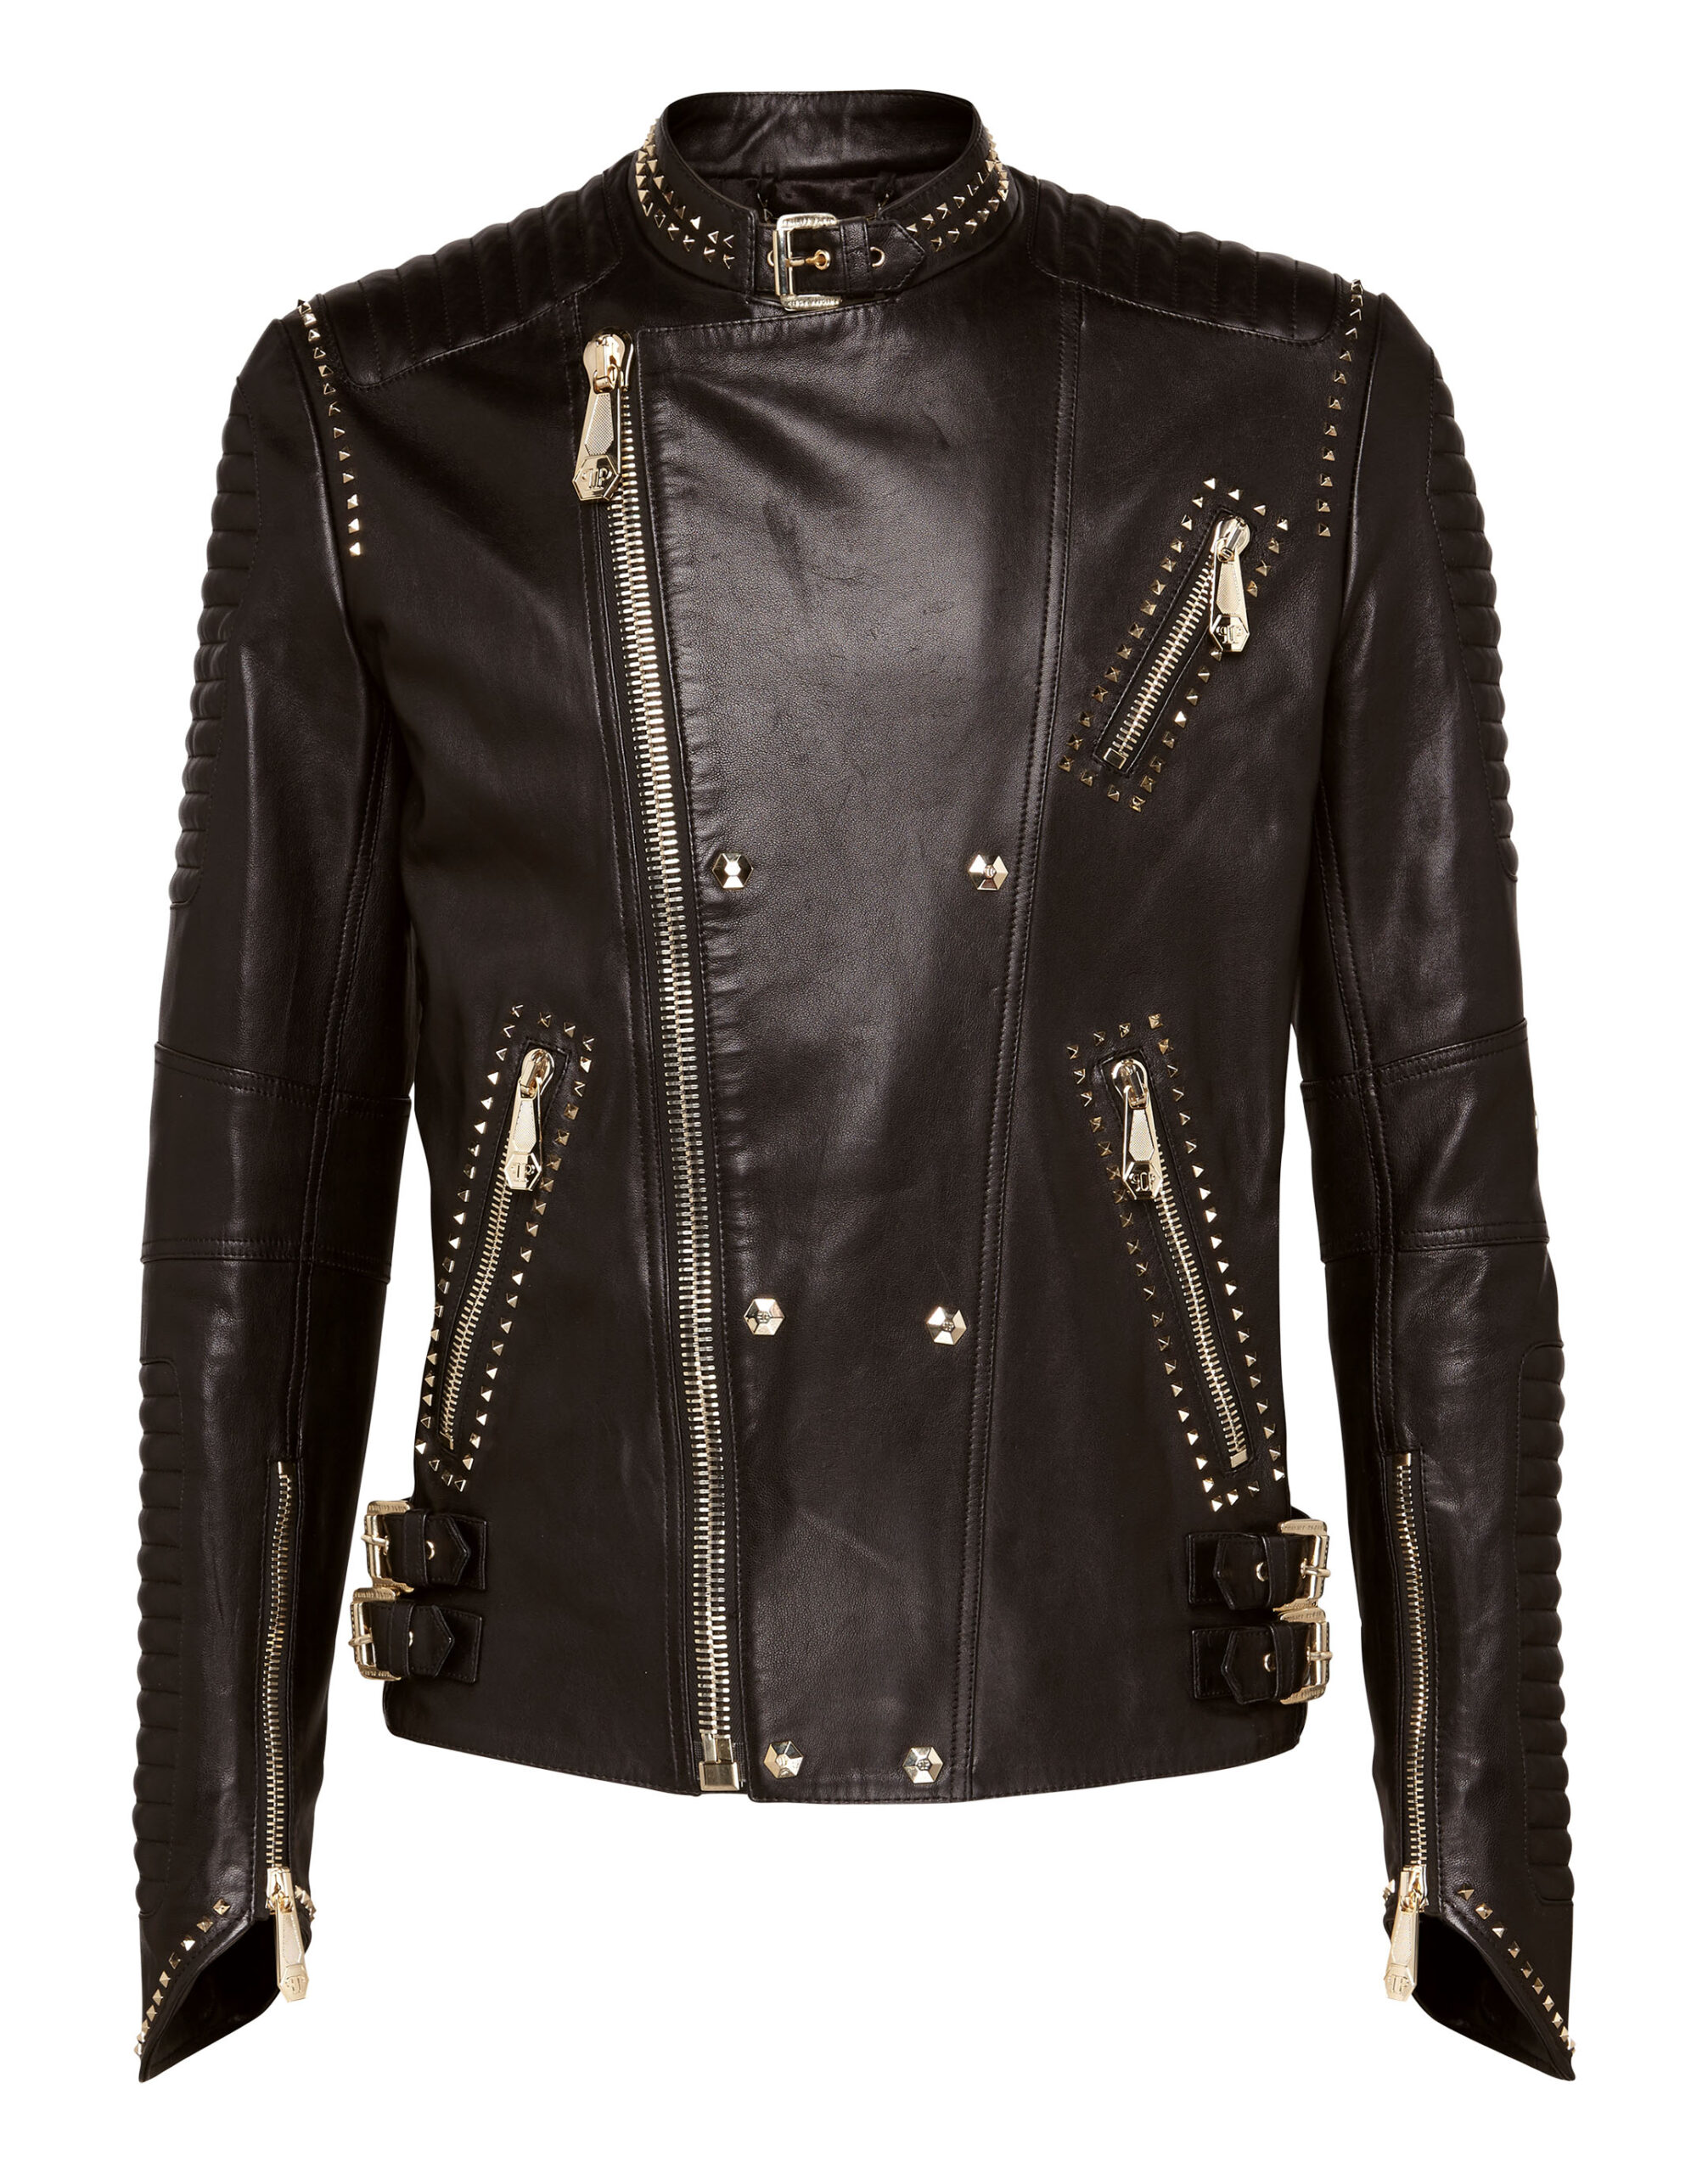 Philipp Plein Leather Biker Jacket - Leather Guys: Luxury Leather Jackets